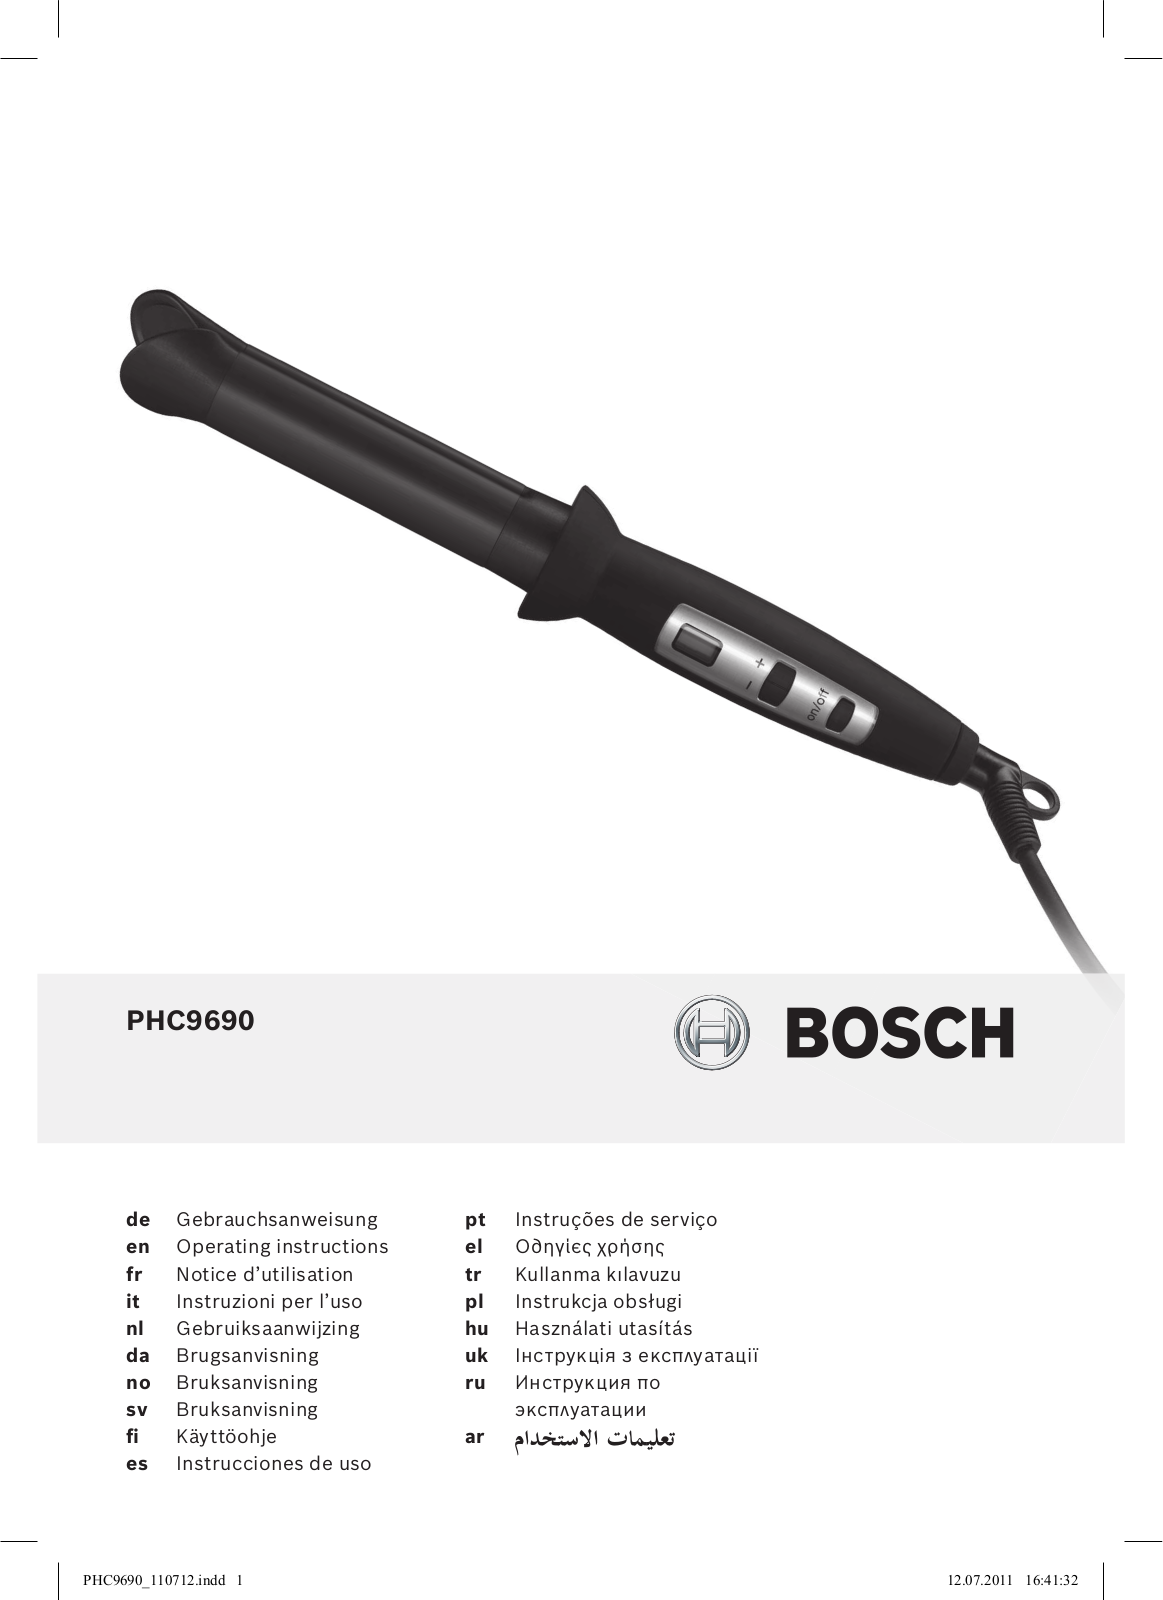 Bosch PHC 9690 User Manual